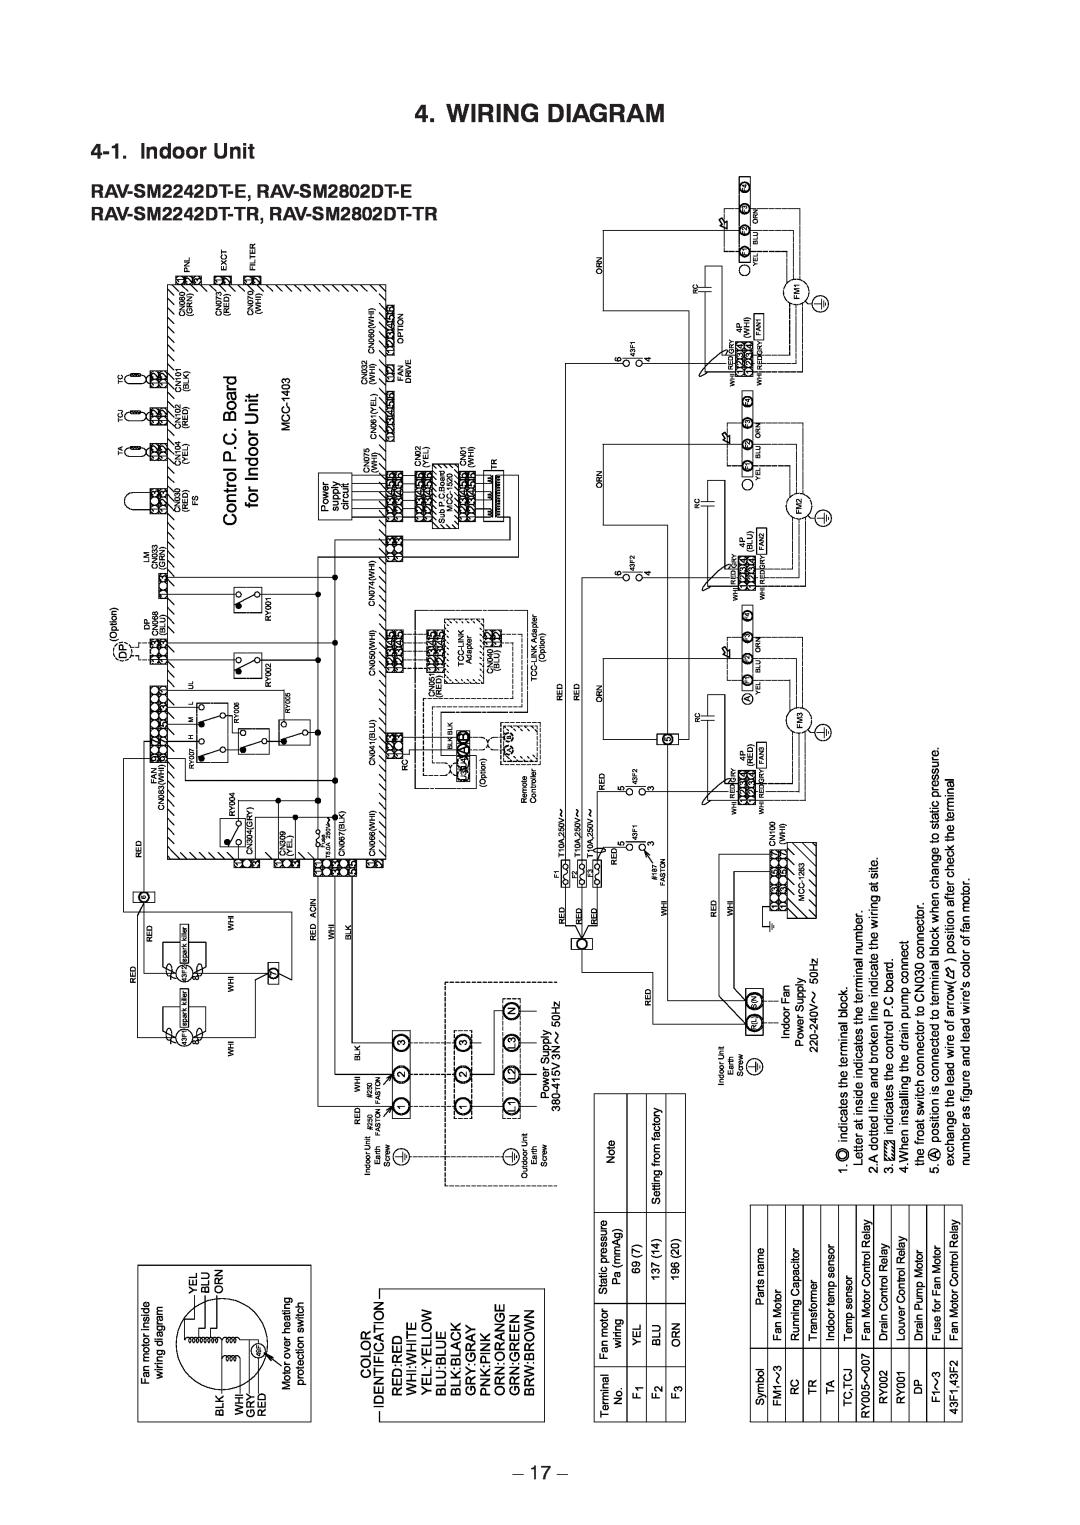 Toshiba RAV-SM2242DT-TR service manual 17, Control P.C. Board, for Indoor Unit, E,RAV-SM2802DT-E -TR,RAV-SM2802DT-TR 